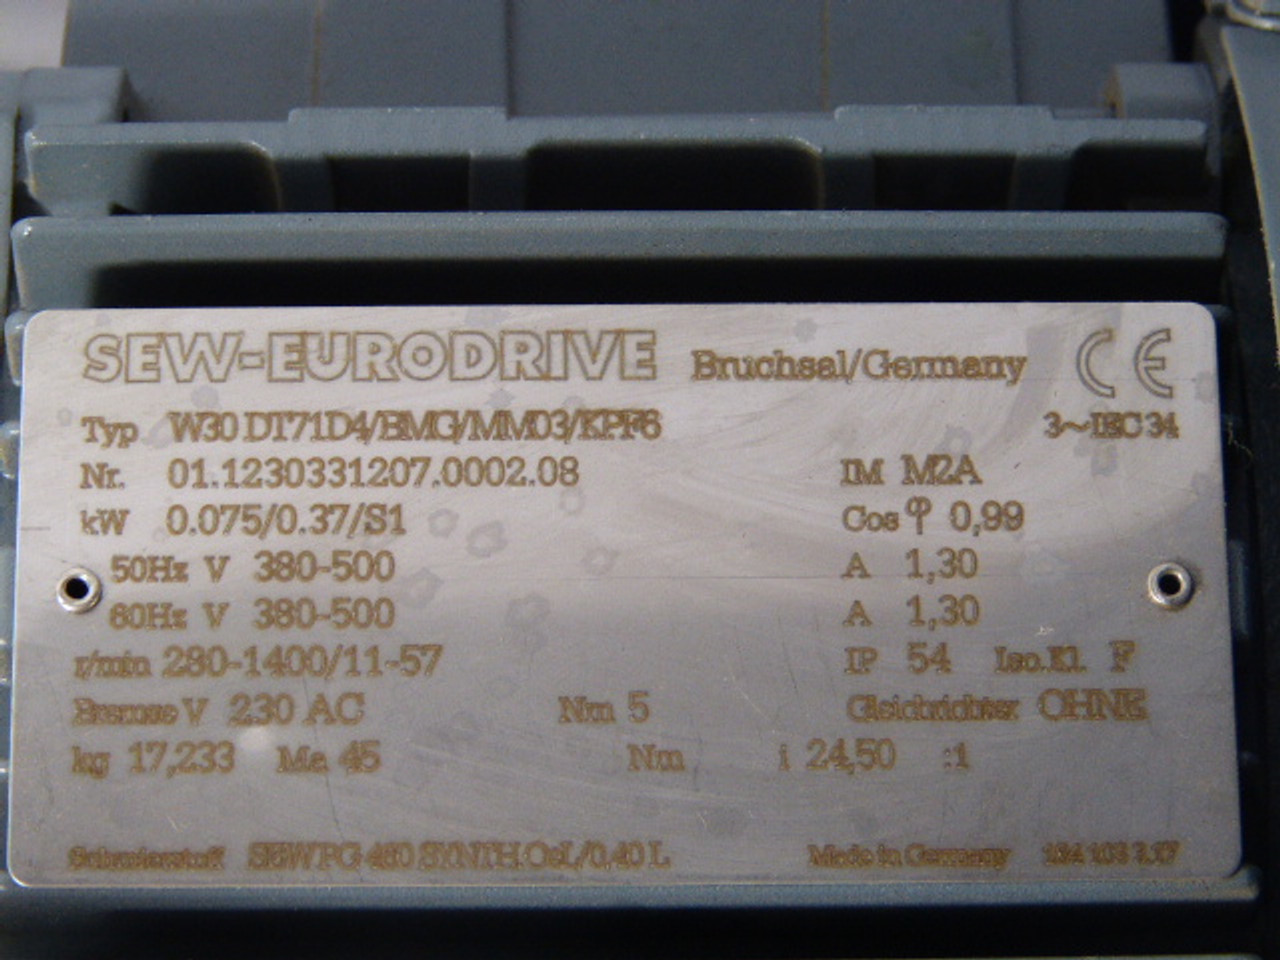 Sew-Eurodrive 0.75kW 280-1400/11-57RPM C/W Gear Reducer 24.50:1 Ratio USED